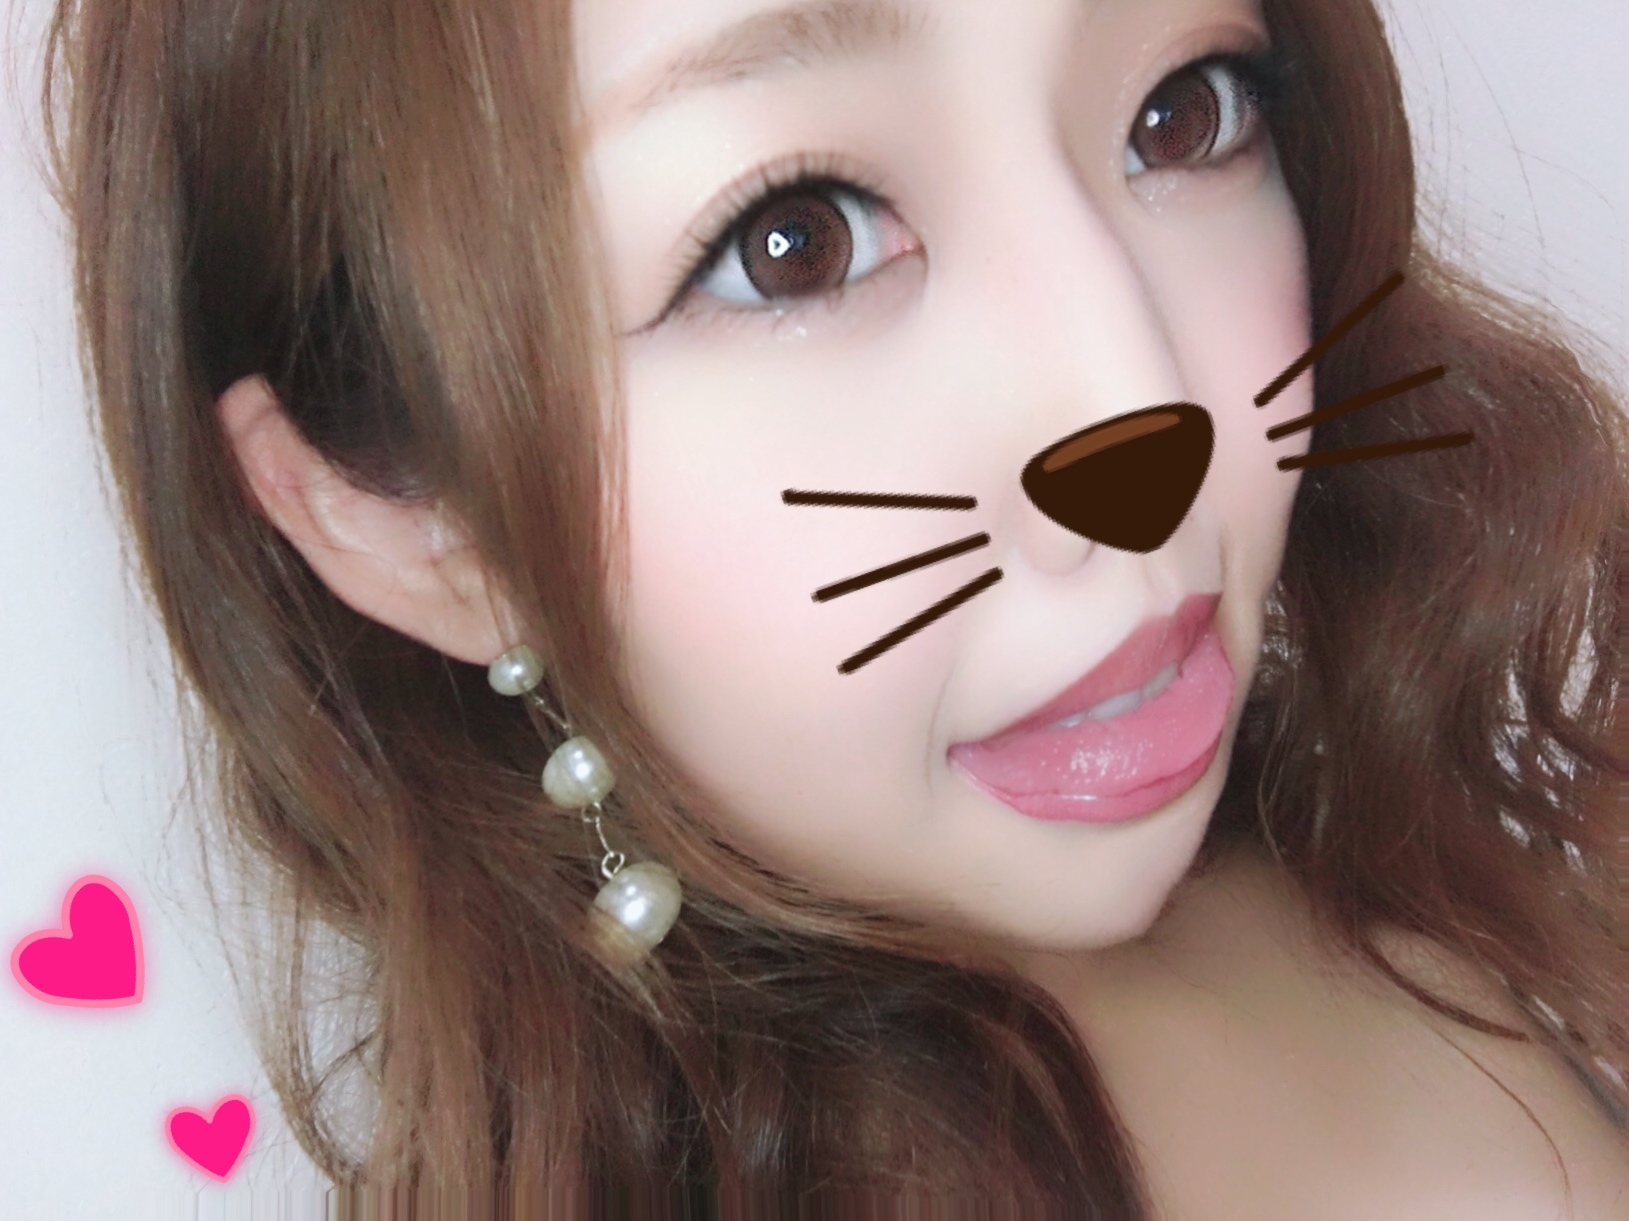 xMAMIv - Japanese webcam girl